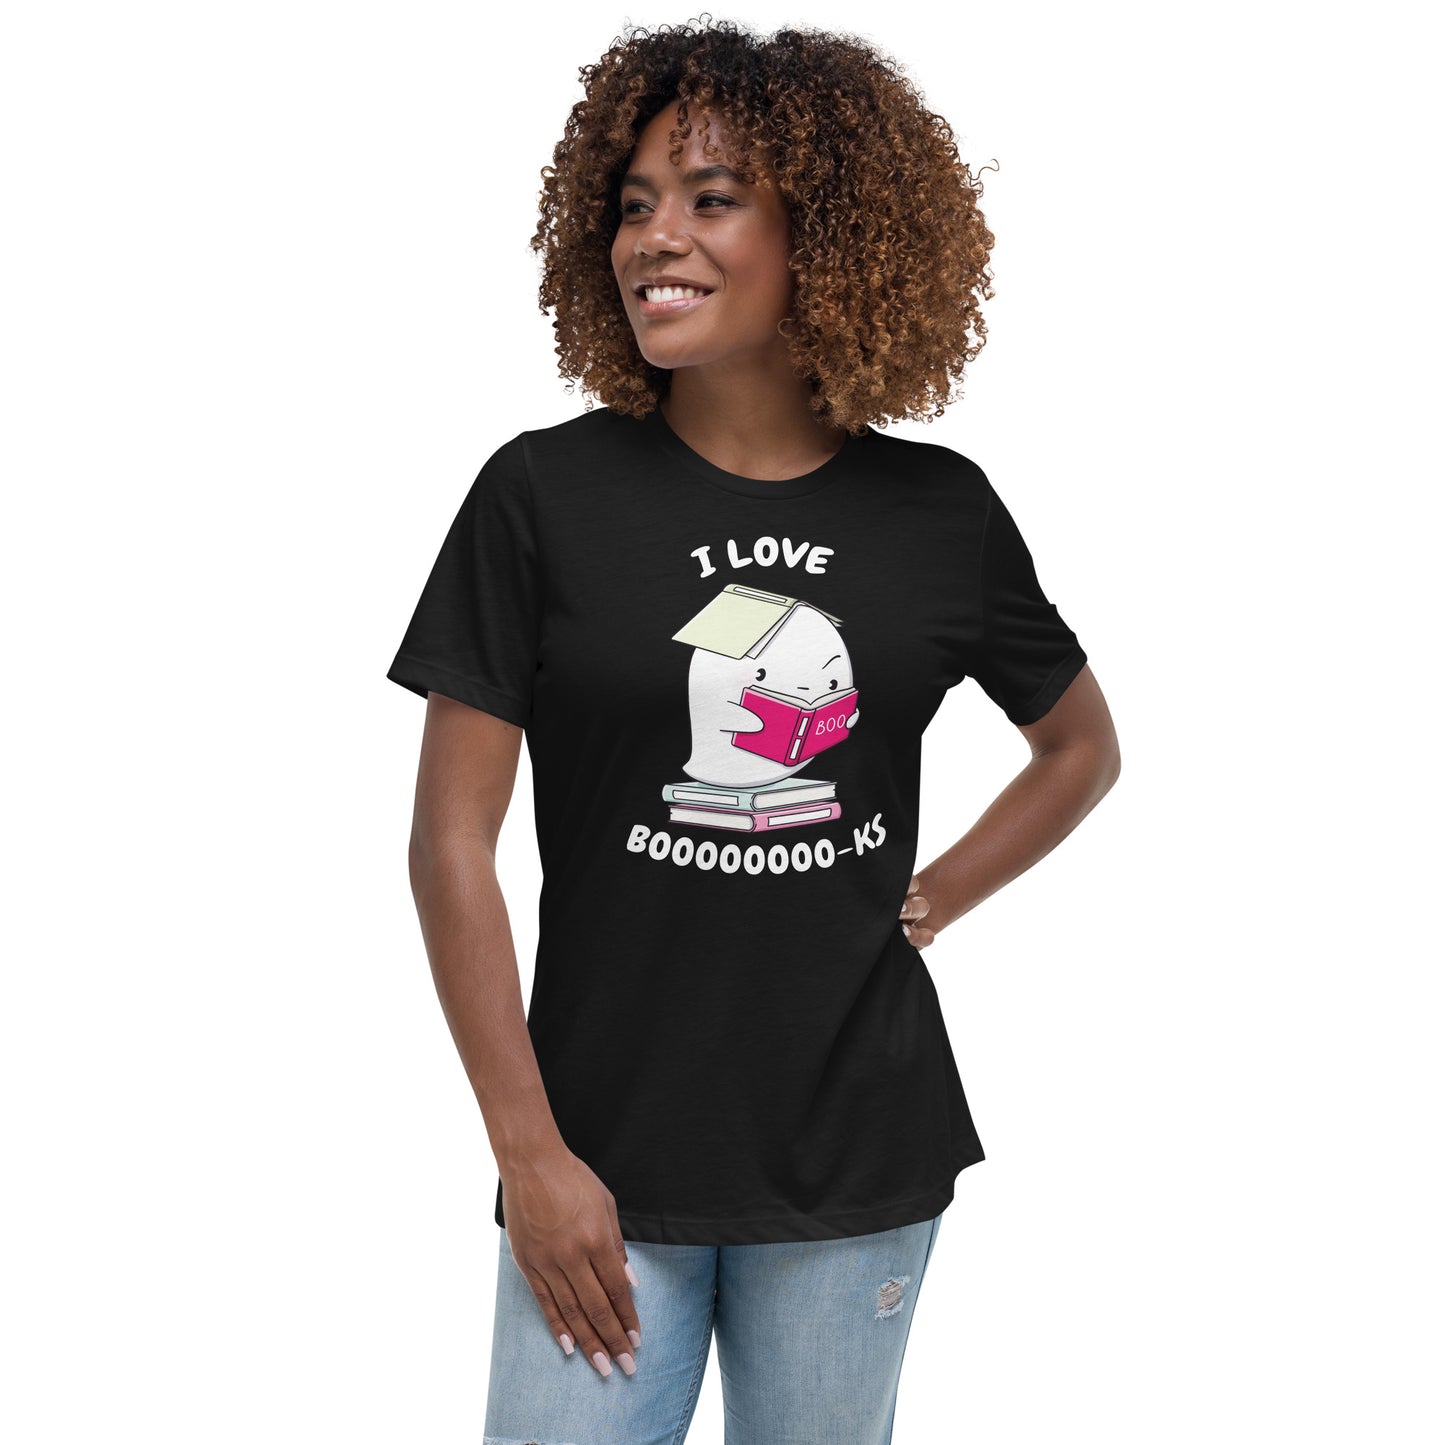 I love books - Women's Relaxed T-Shirt